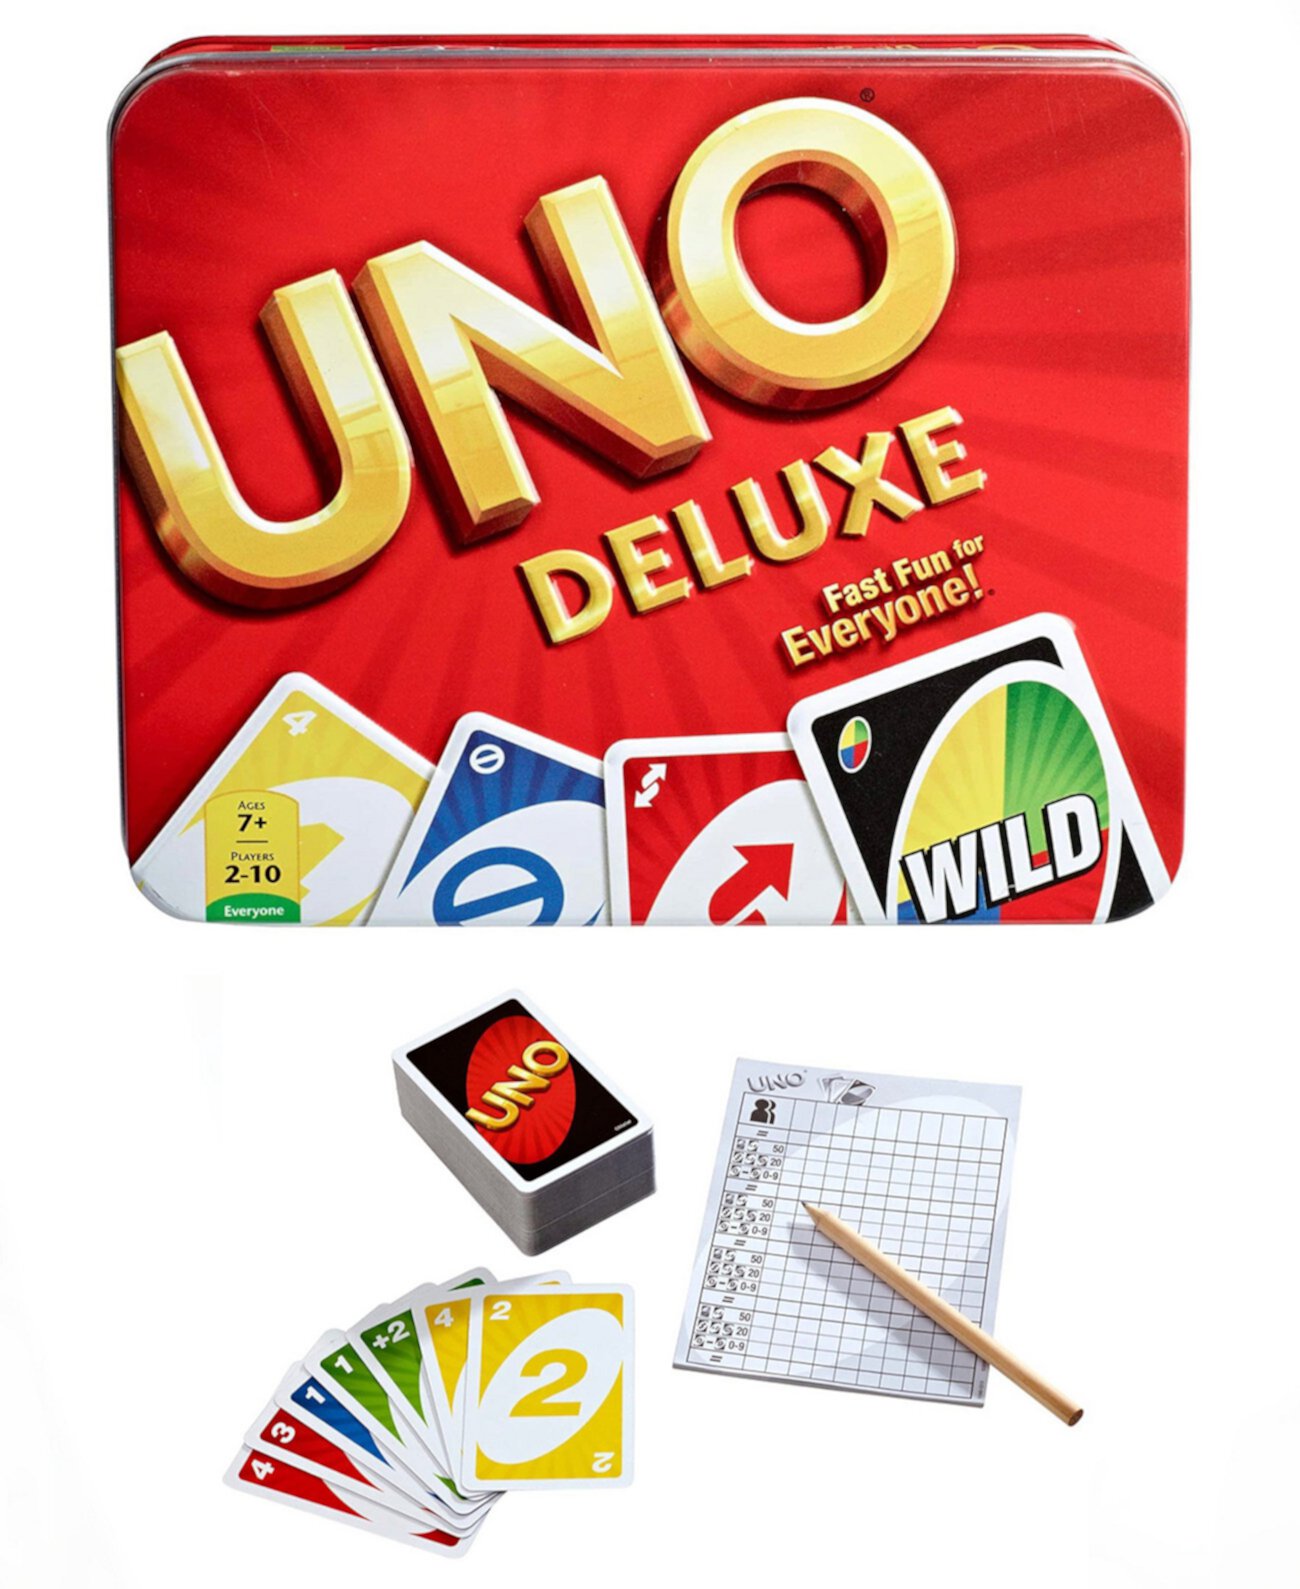 Uno Deluxe в карточной игре Tin Storage Mattel